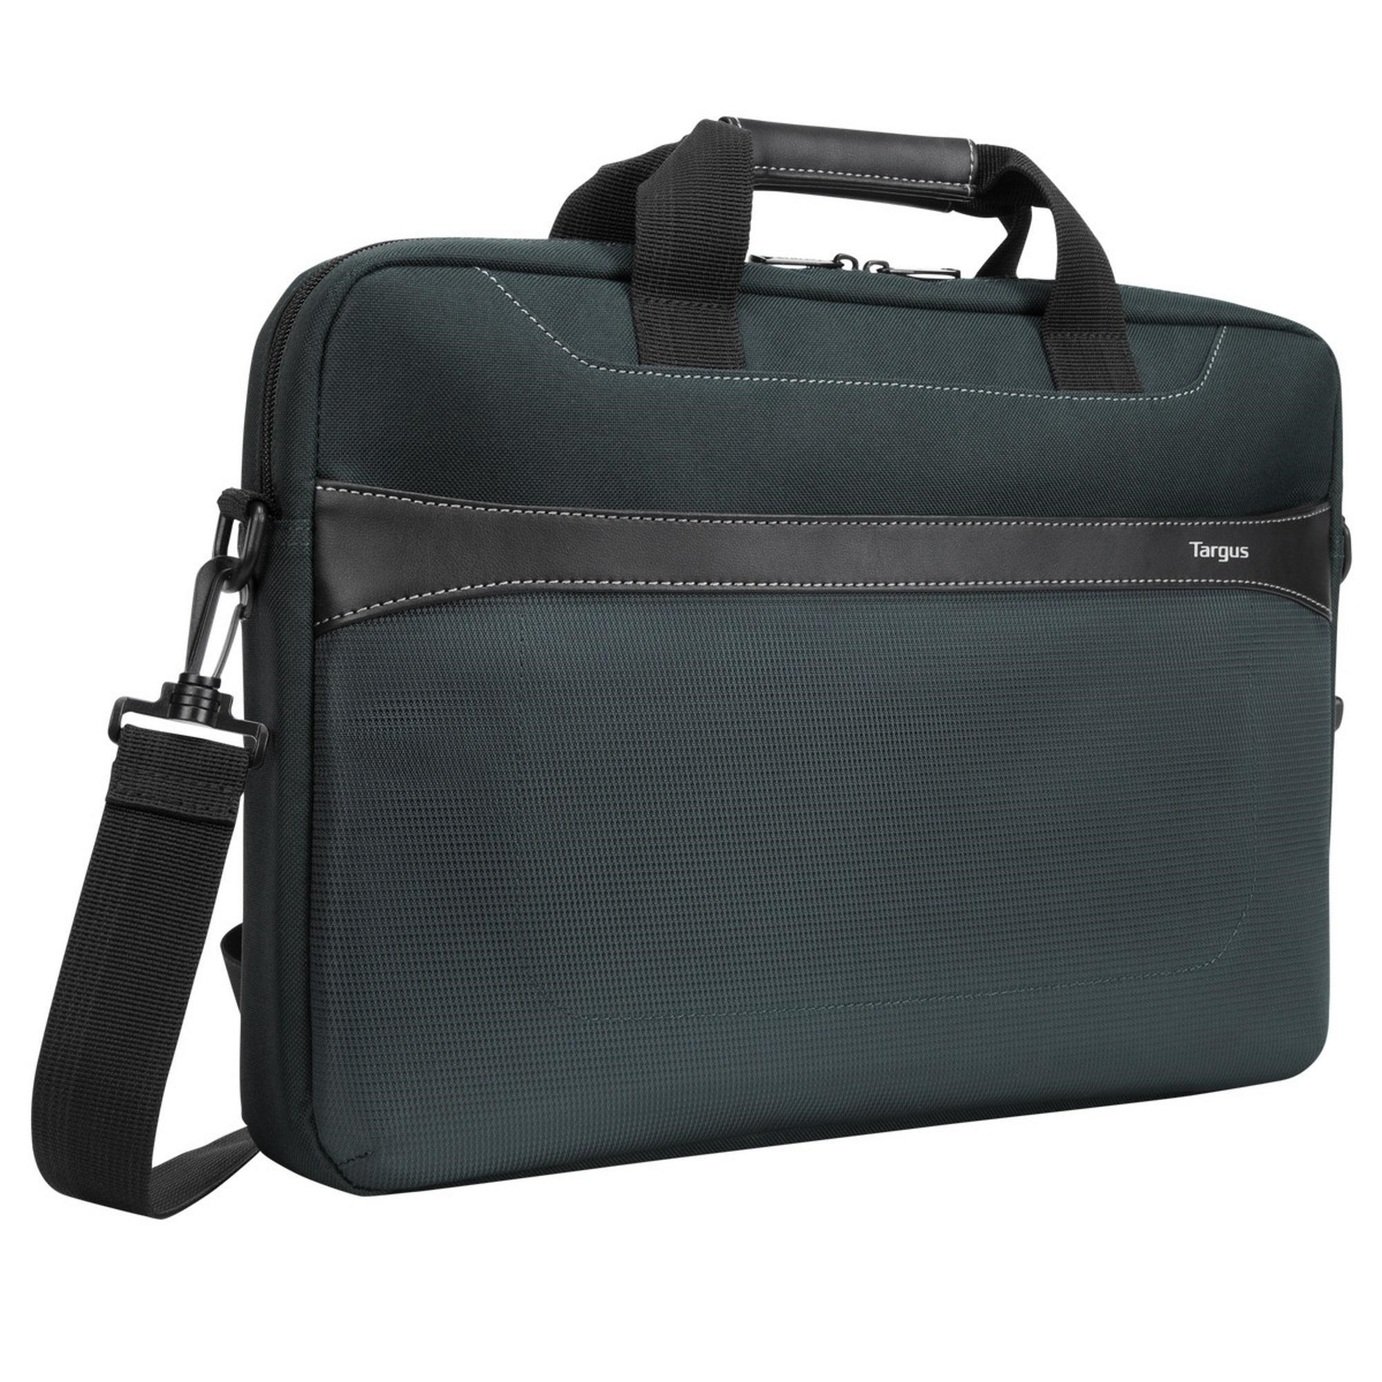 Targus GeoLite 15.6 Inch Laptop Bag Review